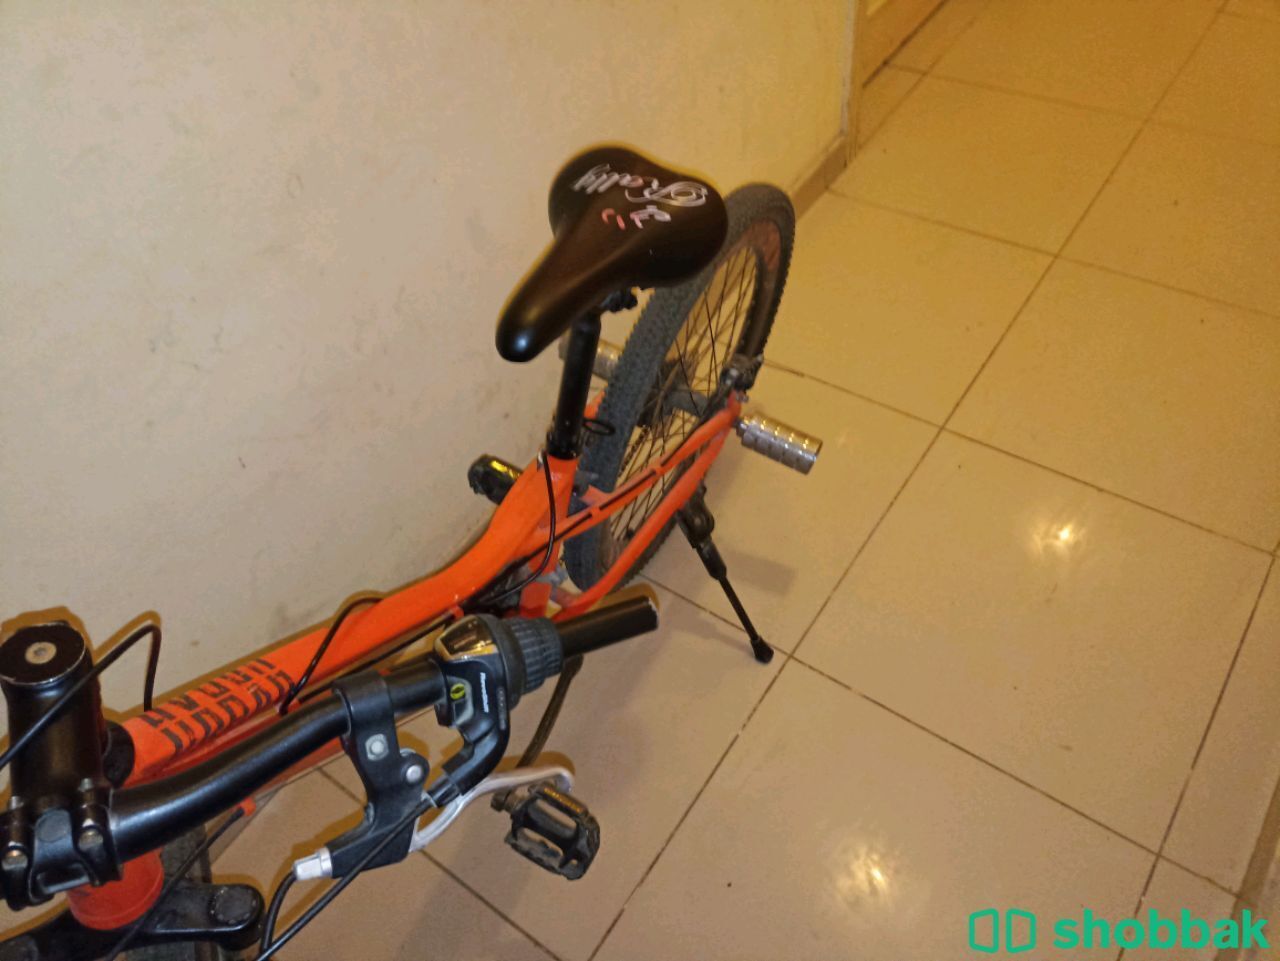 دراجه هوائيه للبيع Shobbak Saudi Arabia